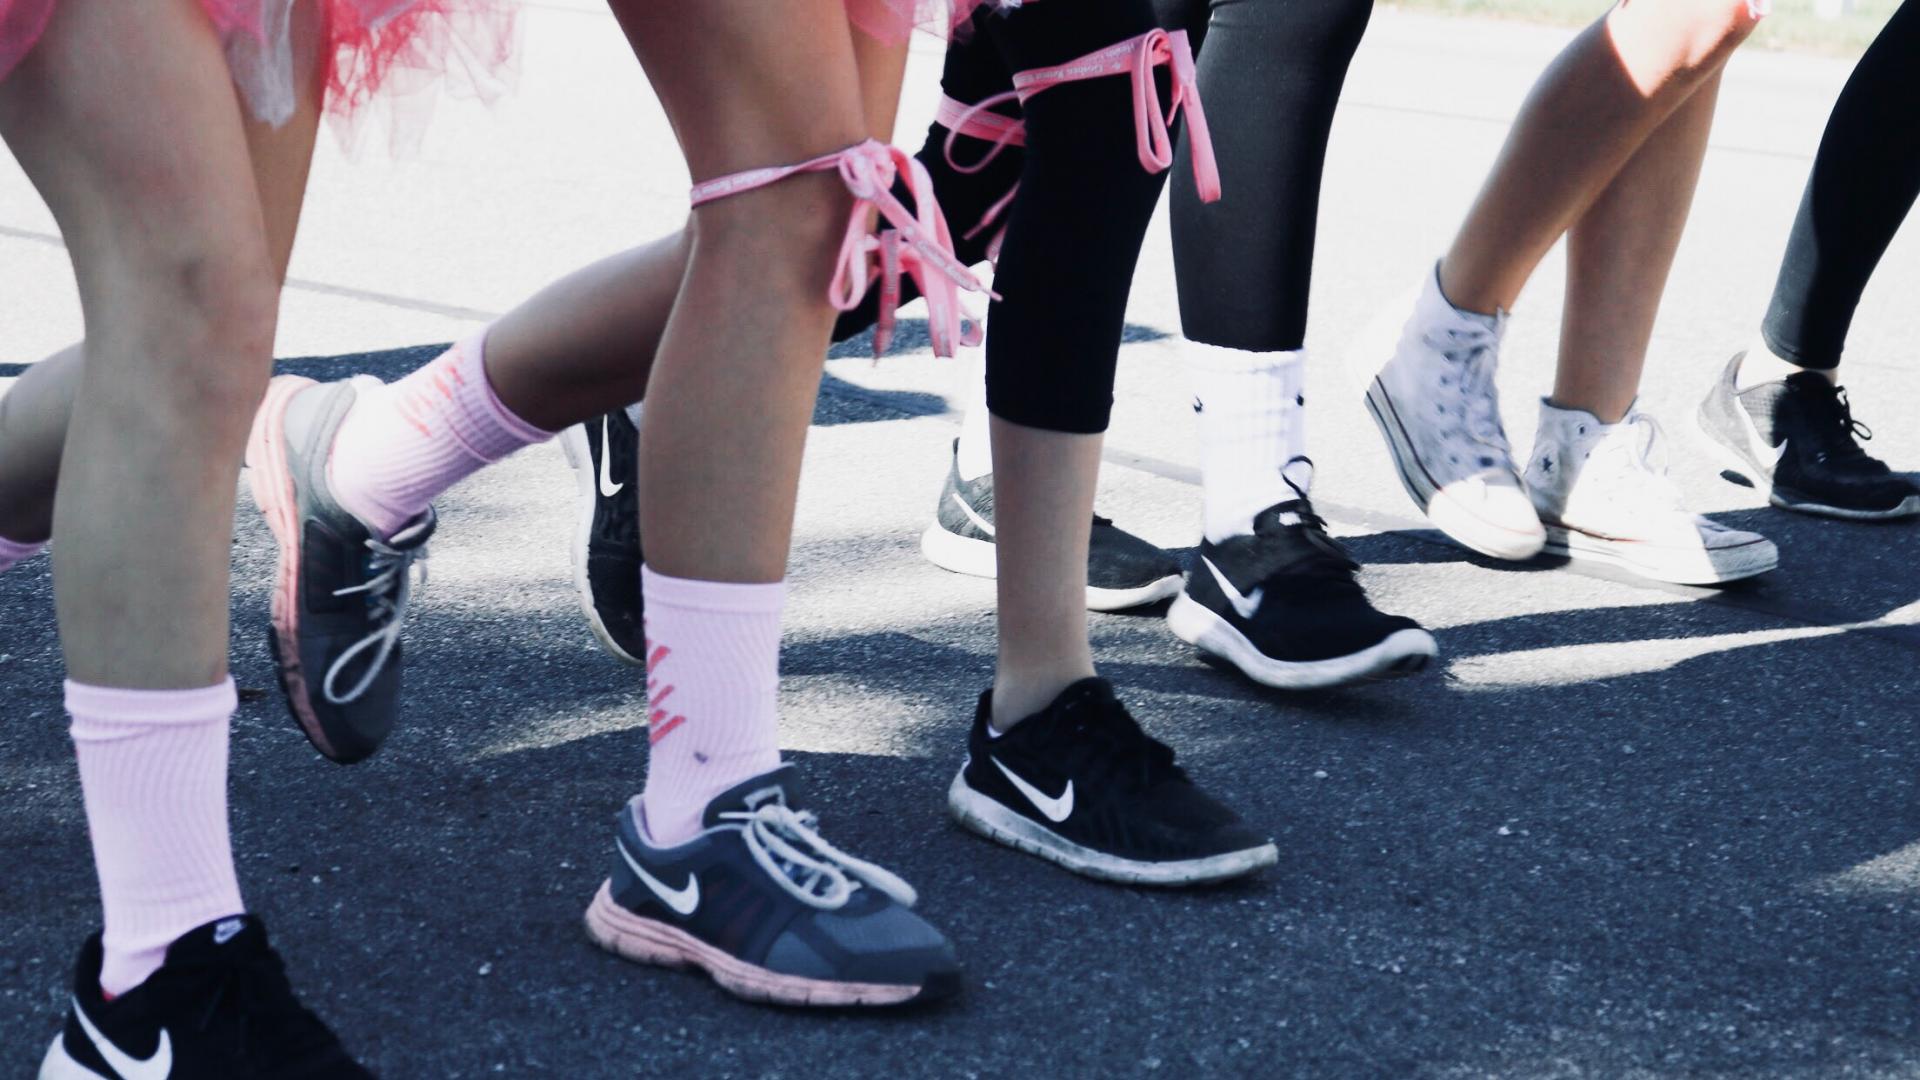 The legs of people taking part in a fun run